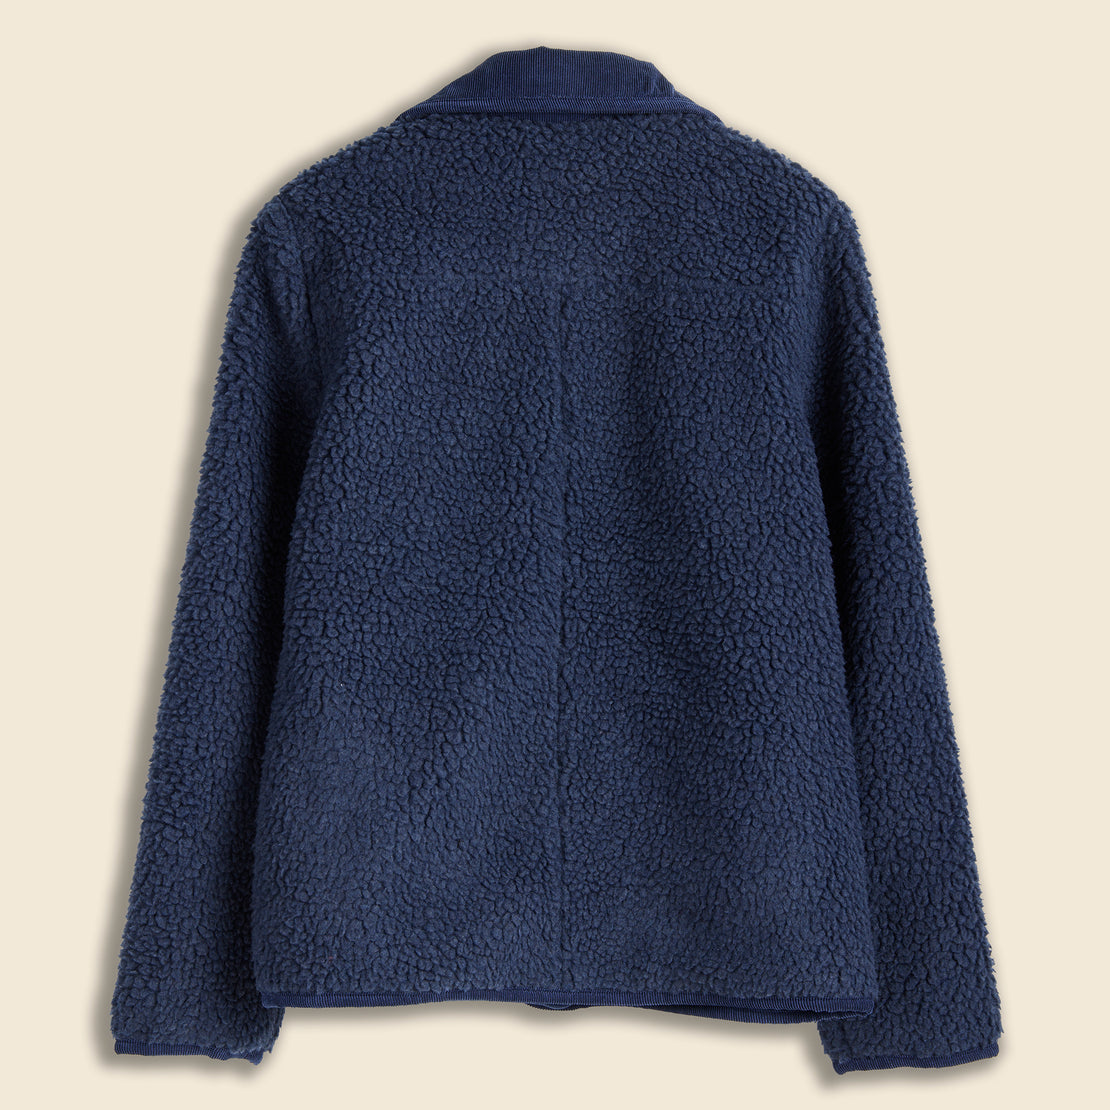 Sherpa Fleece Jacket - Dark Navy - Alex Mill - STAG Provisions - W - Outerwear - Coat/Jacket